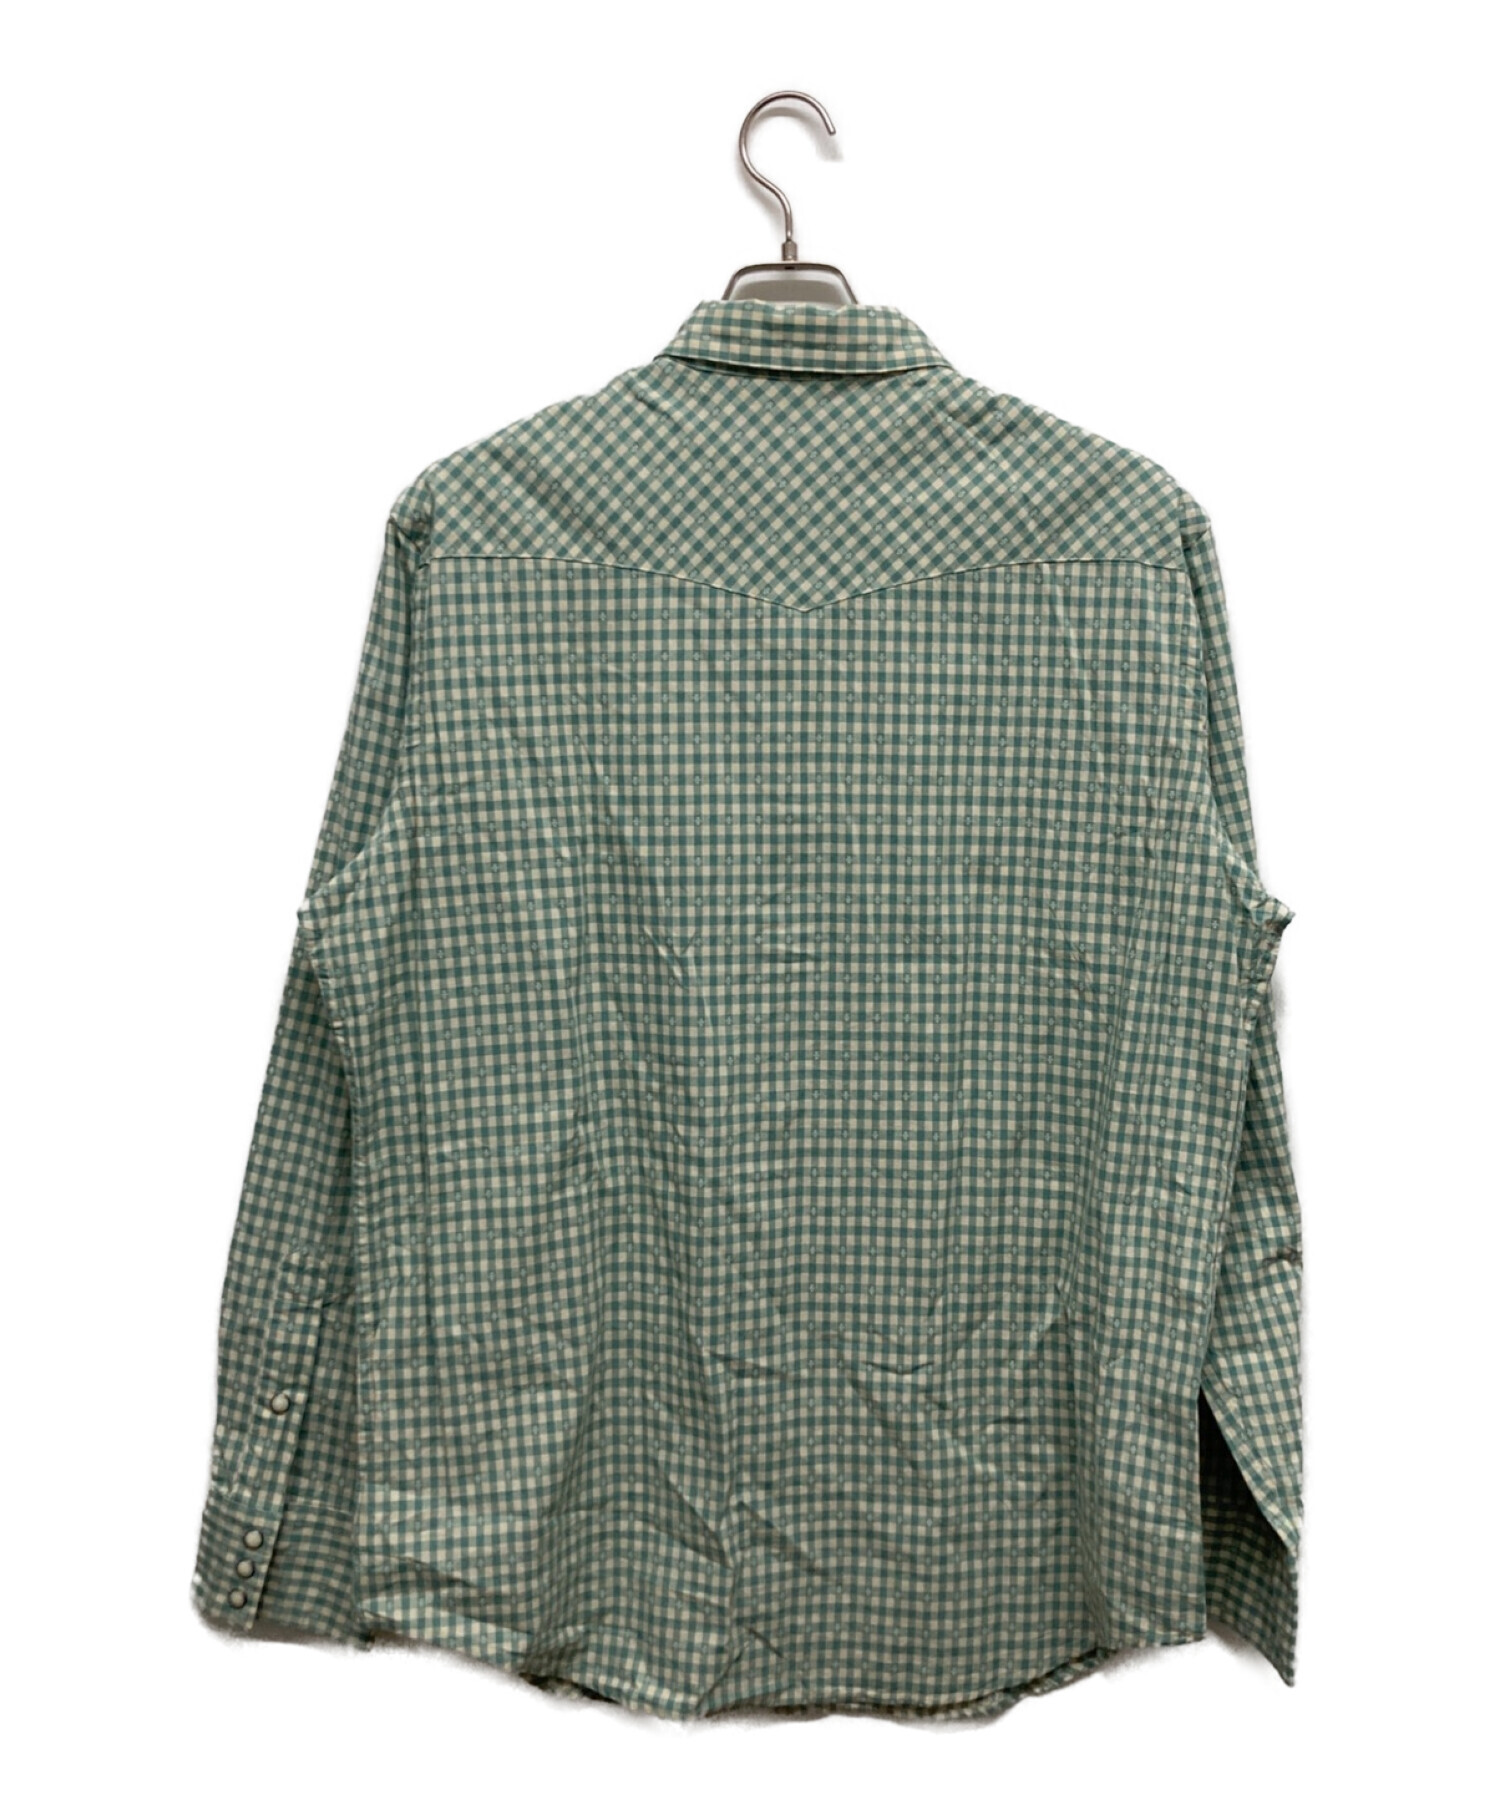 POLO COUNTRY (ポロカントリー) ギンガムチェックシャツ グリーン サイズ:L 未使用品